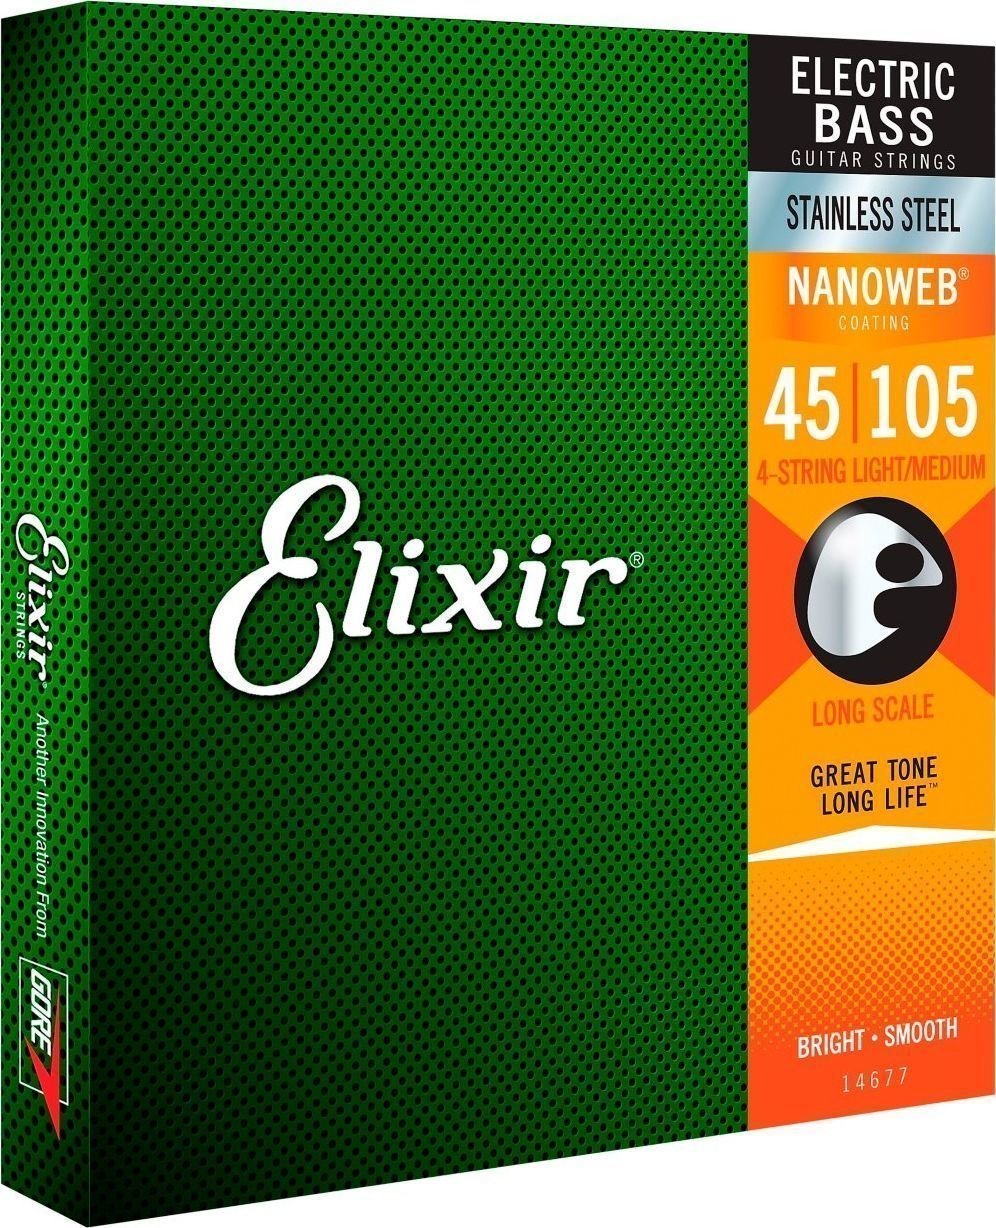 Bassguitar strings Elixir 14677 Nanoweb